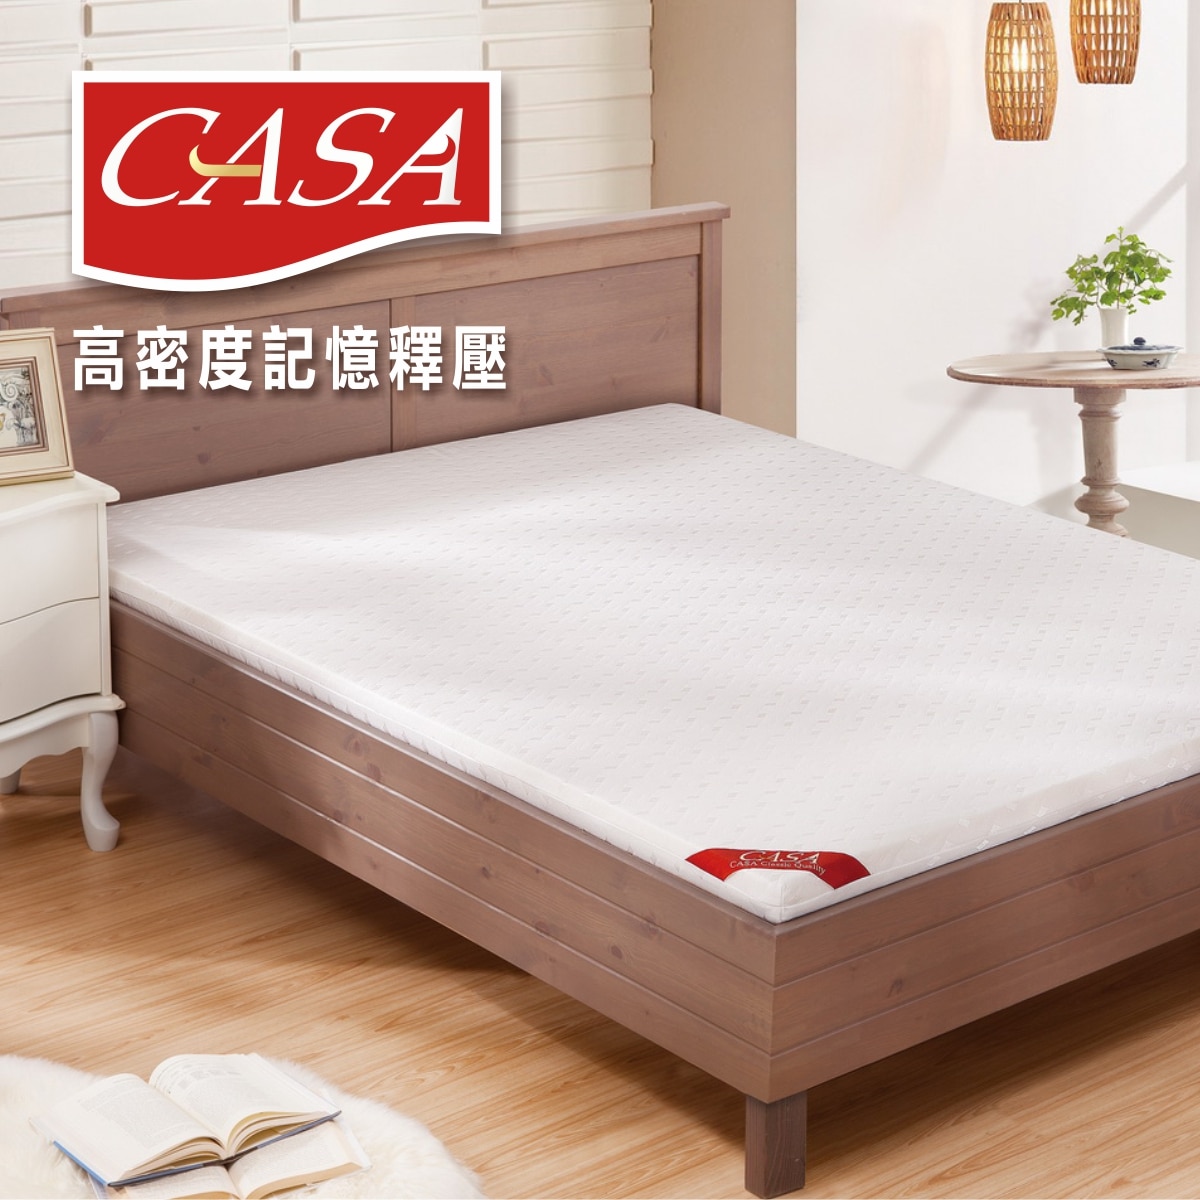 CASA 雙人記憶釋壓床墊 152 x 190 x 5 公分，擁有高密度的釋壓能力。